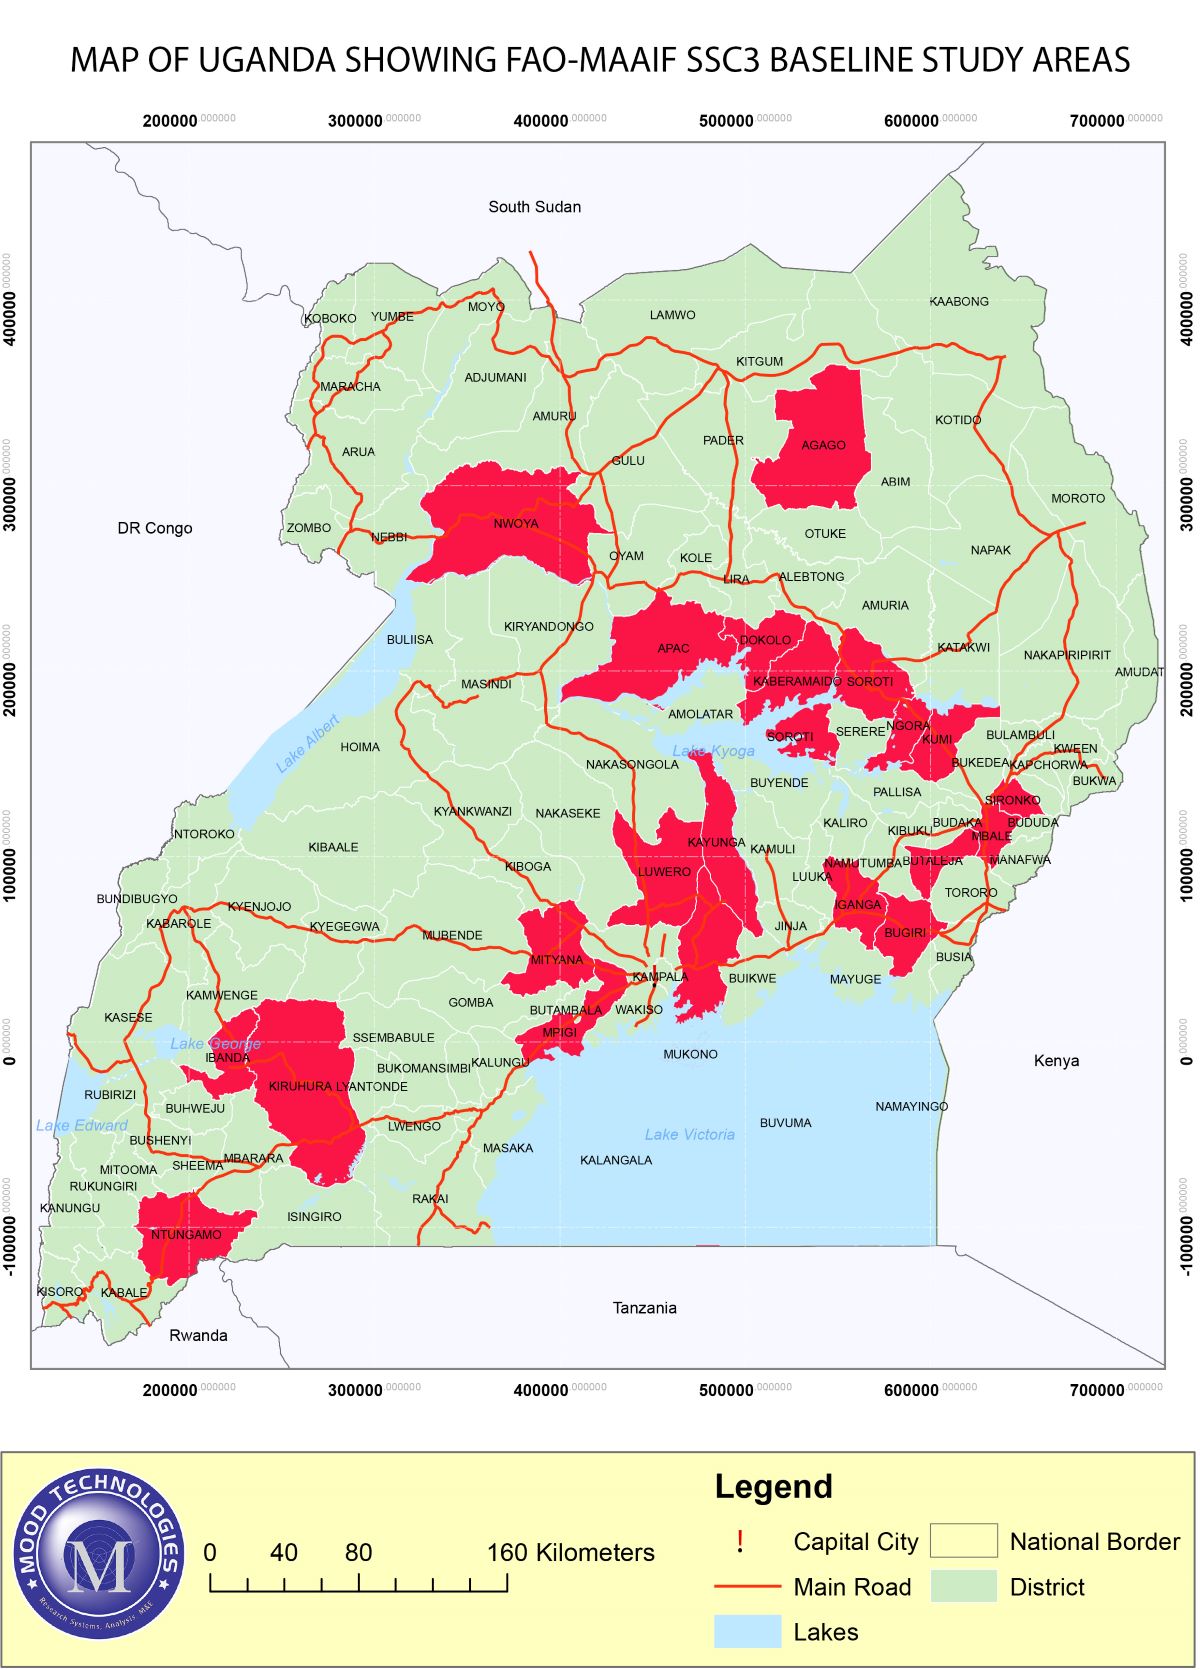 Map of Uganda showing SSC3 Baseline Study locations